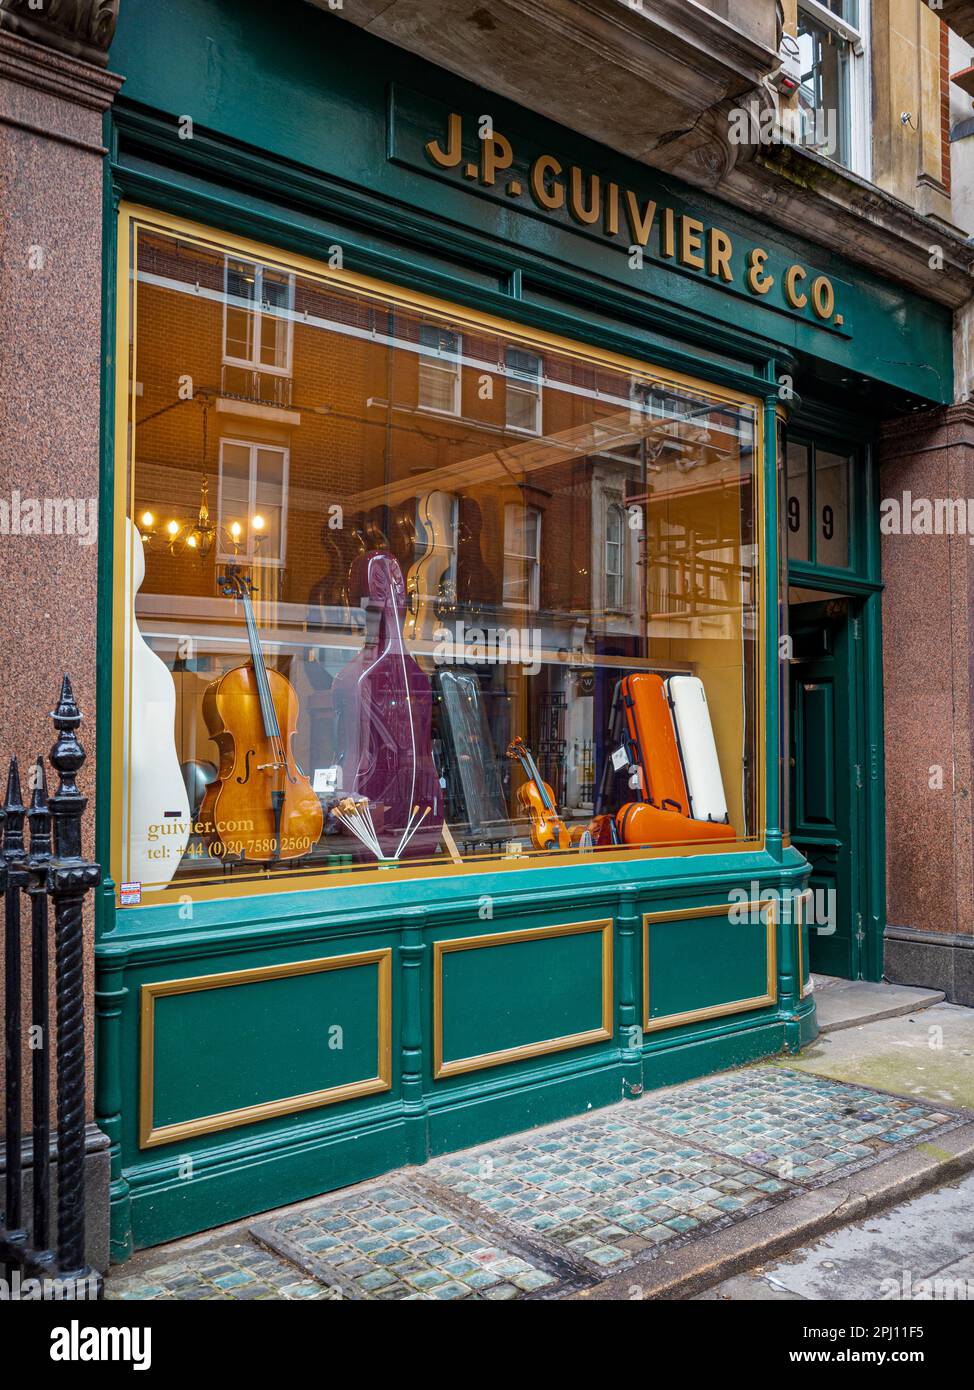 J.P. Guiver & Co London, 99 Mortimer St, London. Musikinstrumentladen. Gegründet 1863 in London. Stockfoto